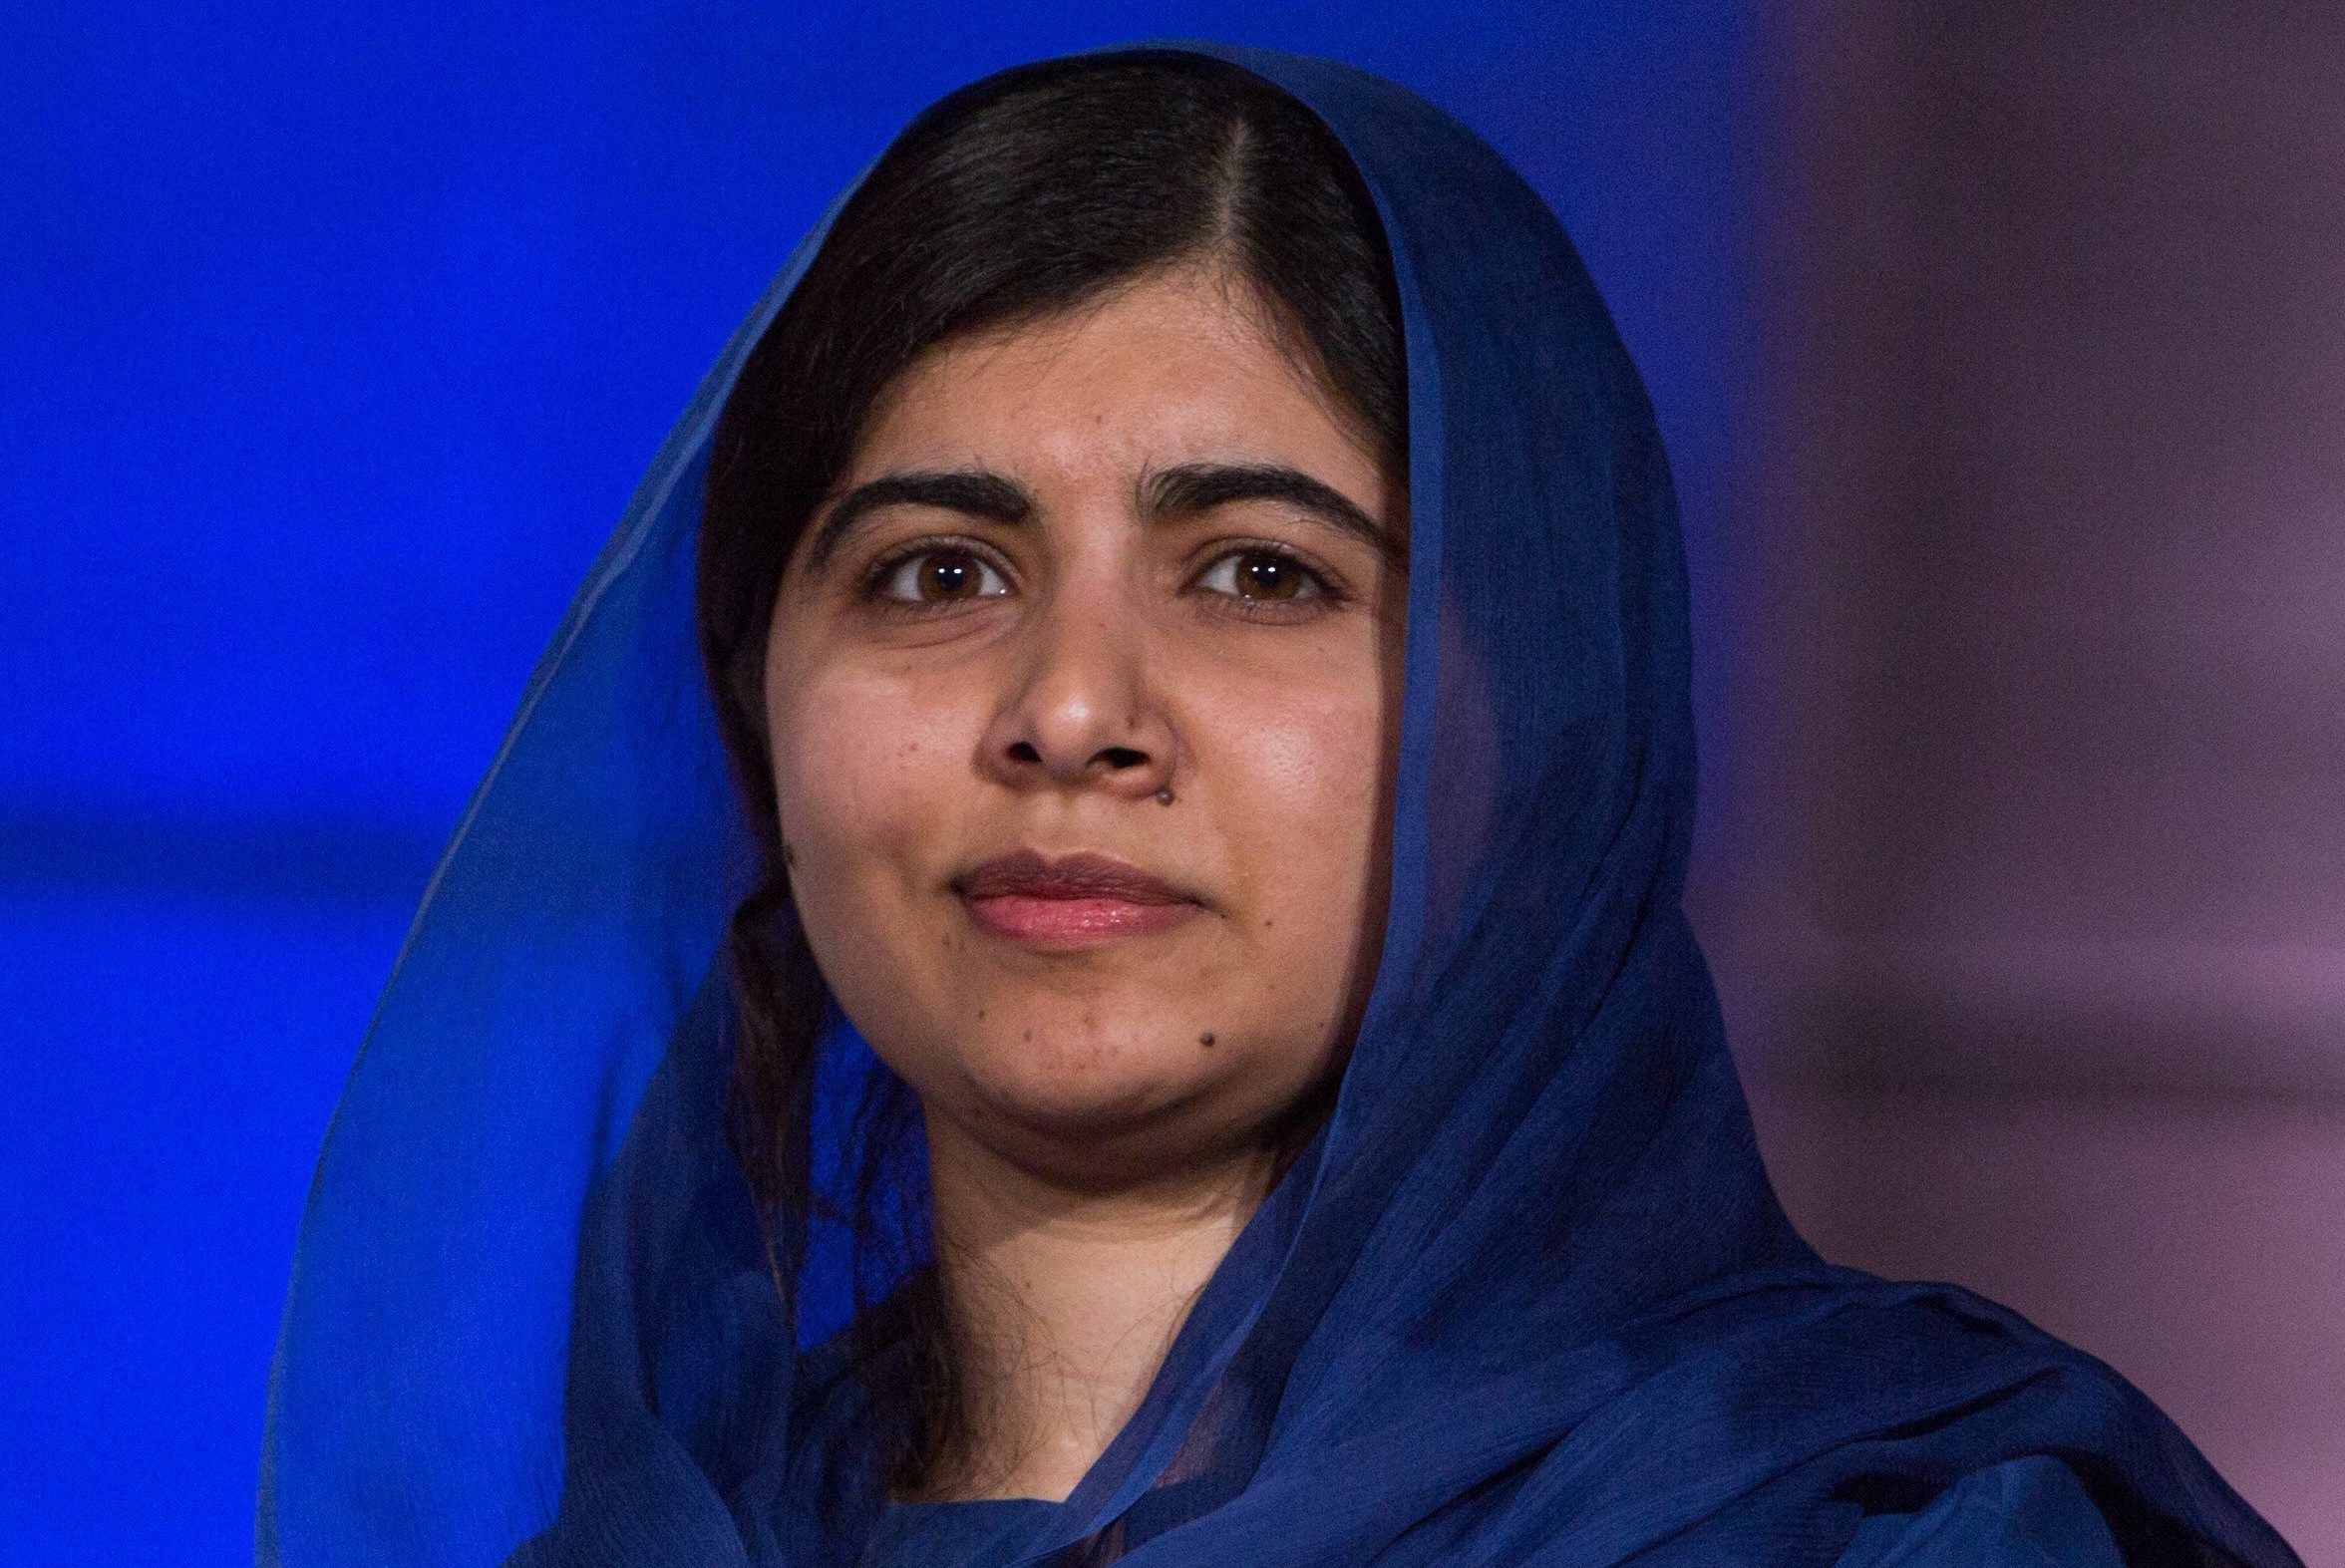 Malala Yousafzai shared experiences shot by the Taliban 